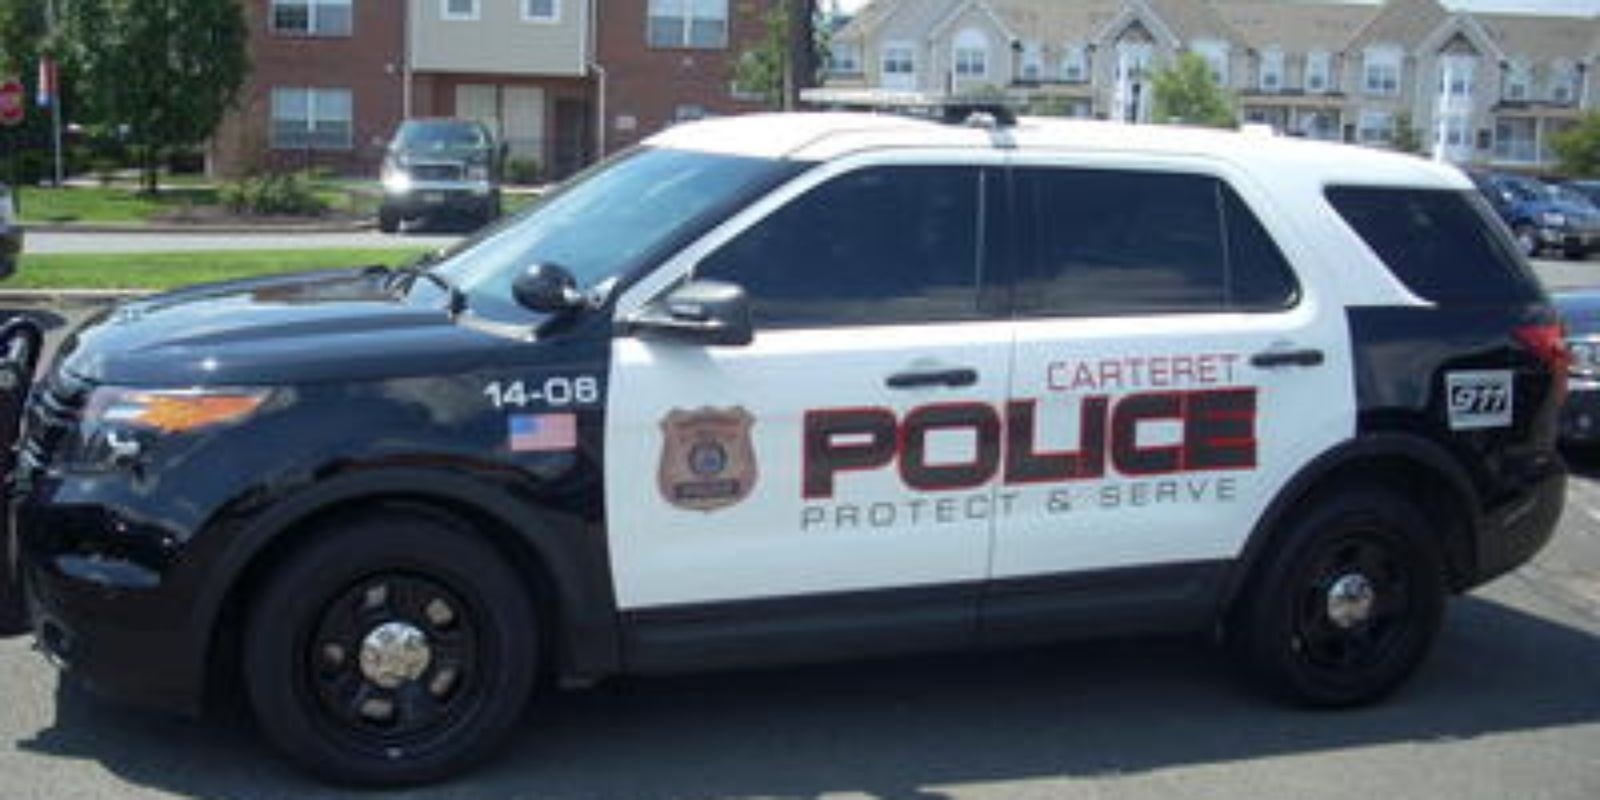 Carteret Police Department, NJ Police Jobs